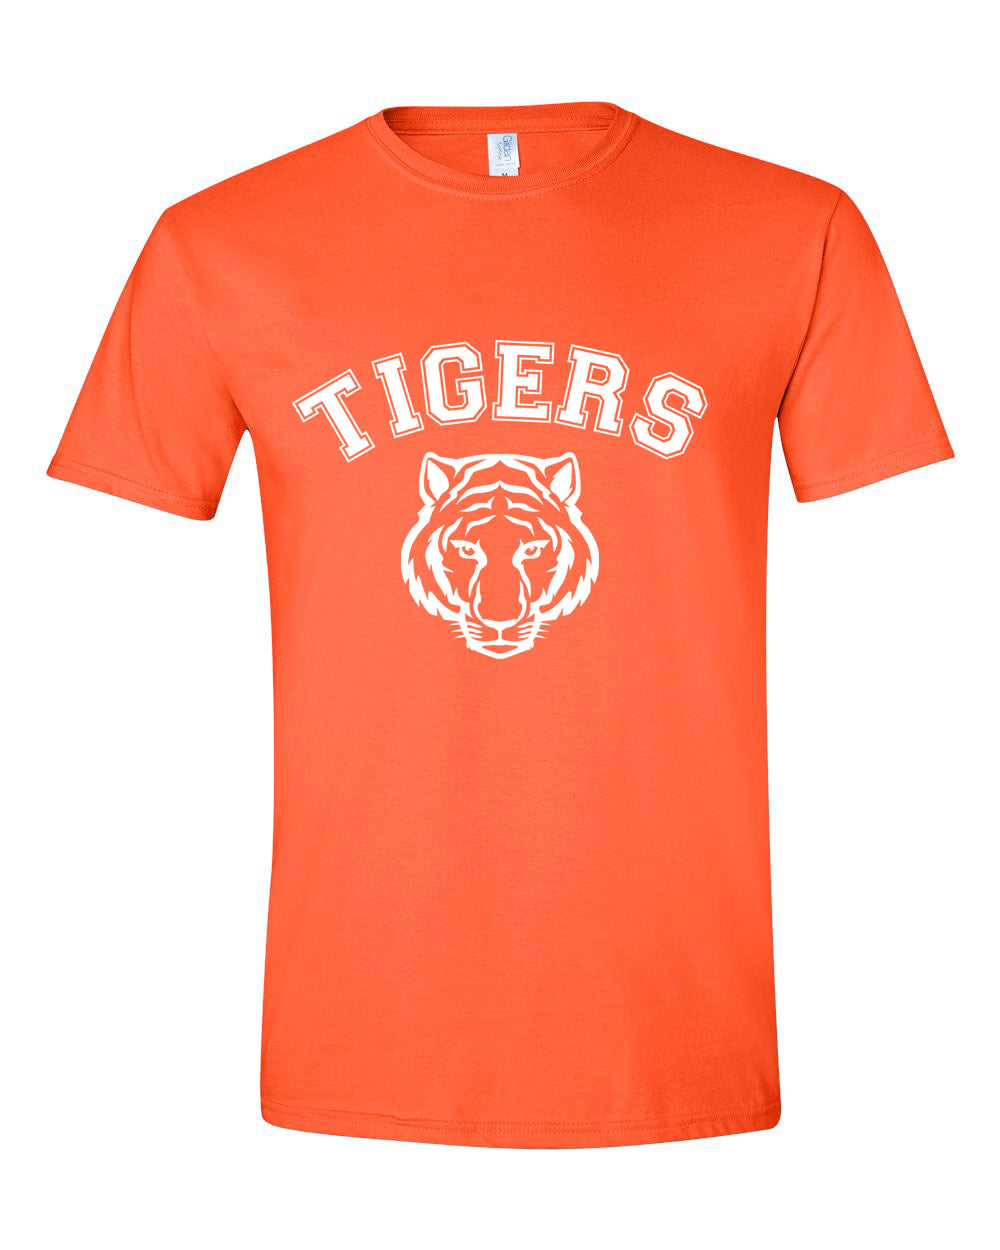 Lafayette Tiger T-Shirt